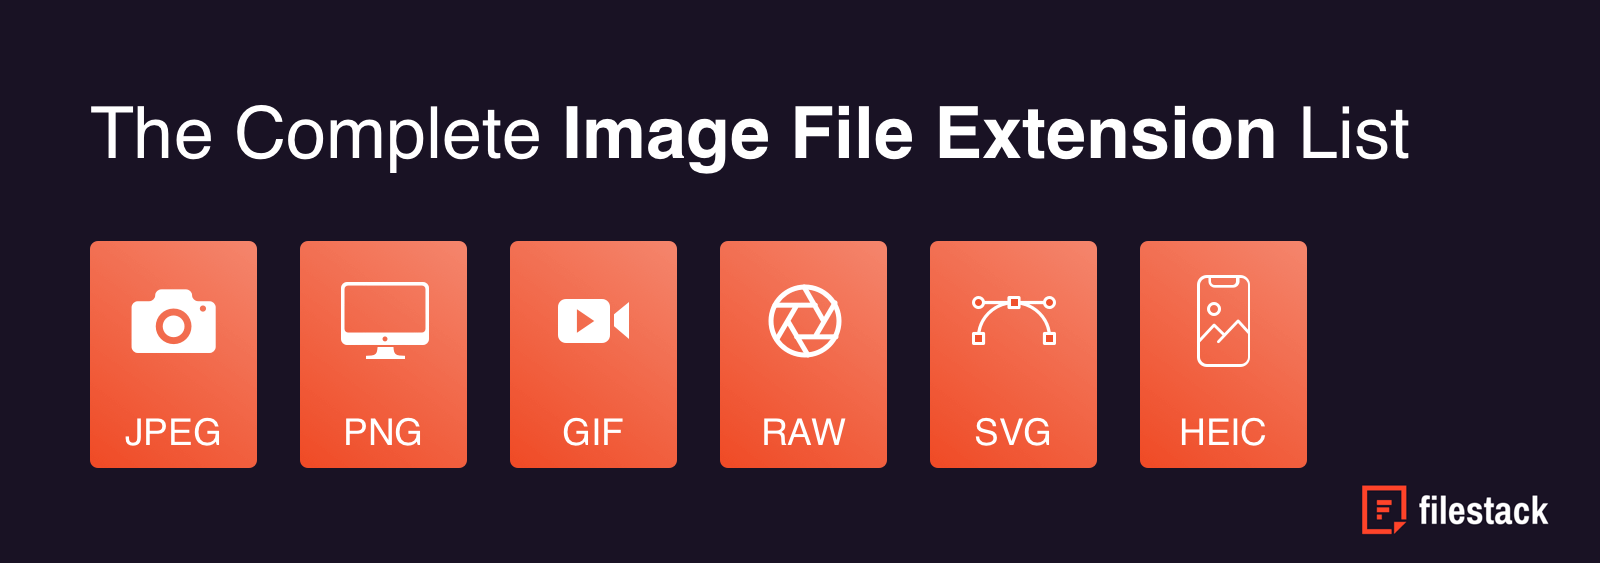 The Complete Image File Extension List For Developers Filestack Blog